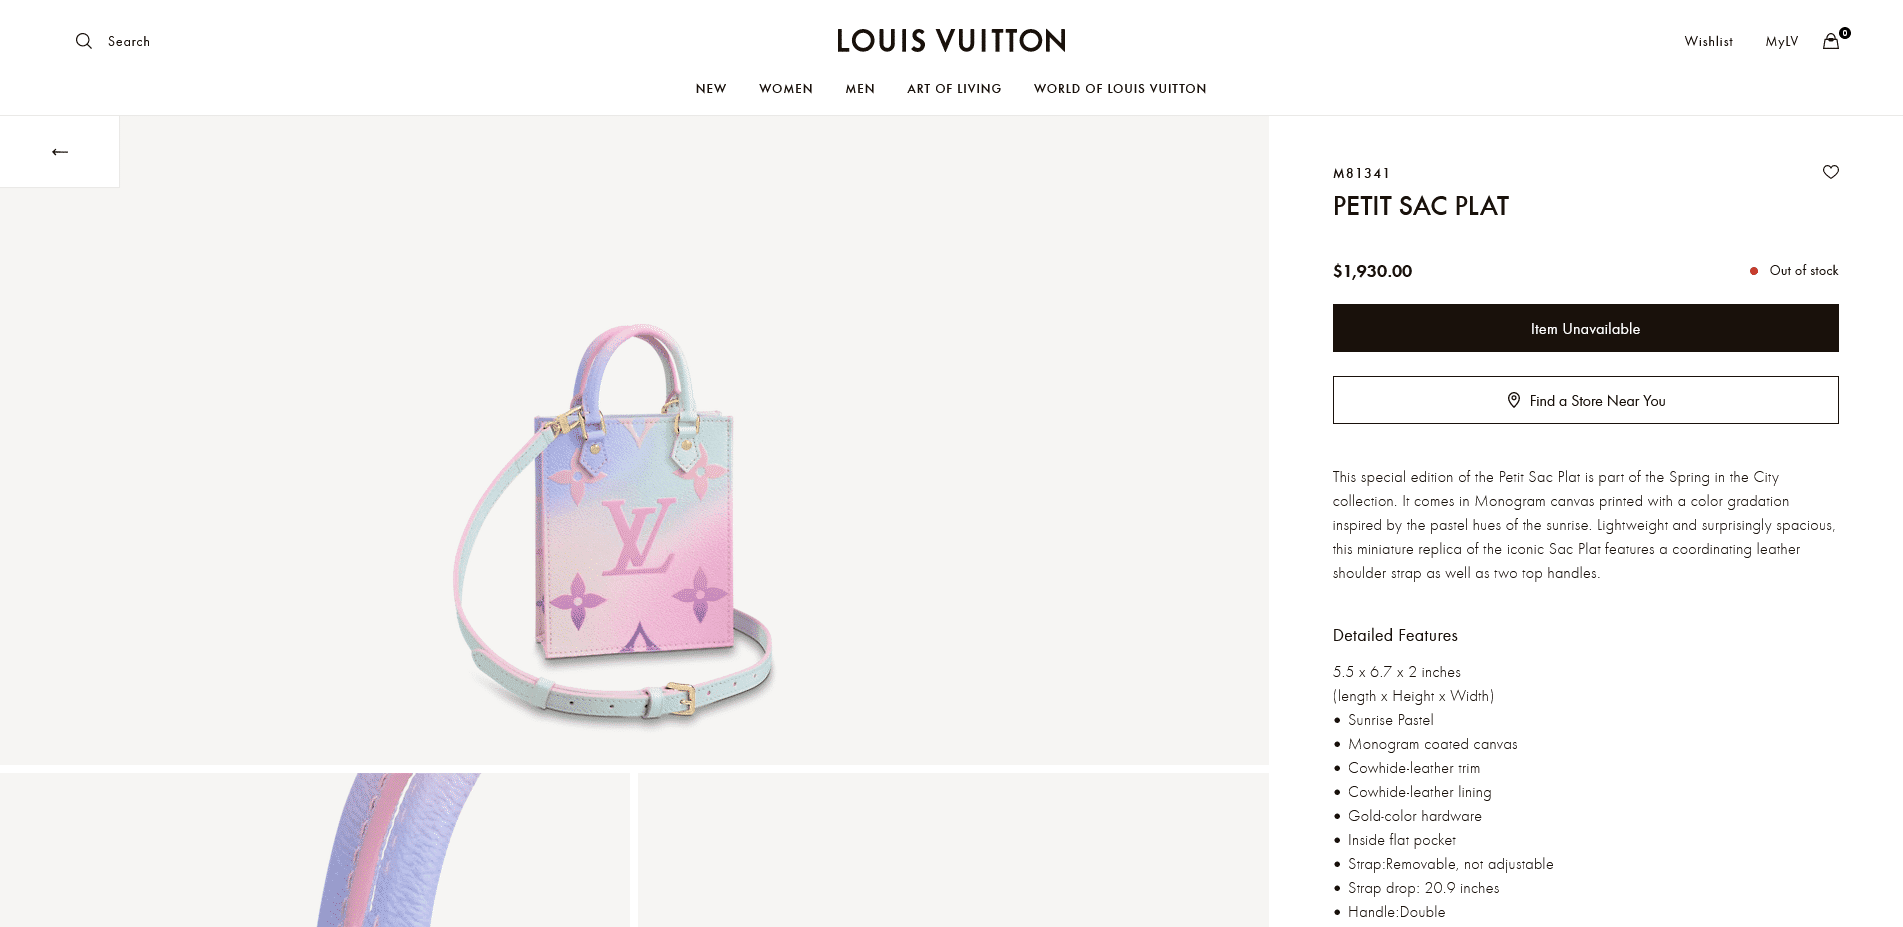 Louis Vuitton Petit Sac Plat Sunrise Pastel for Men